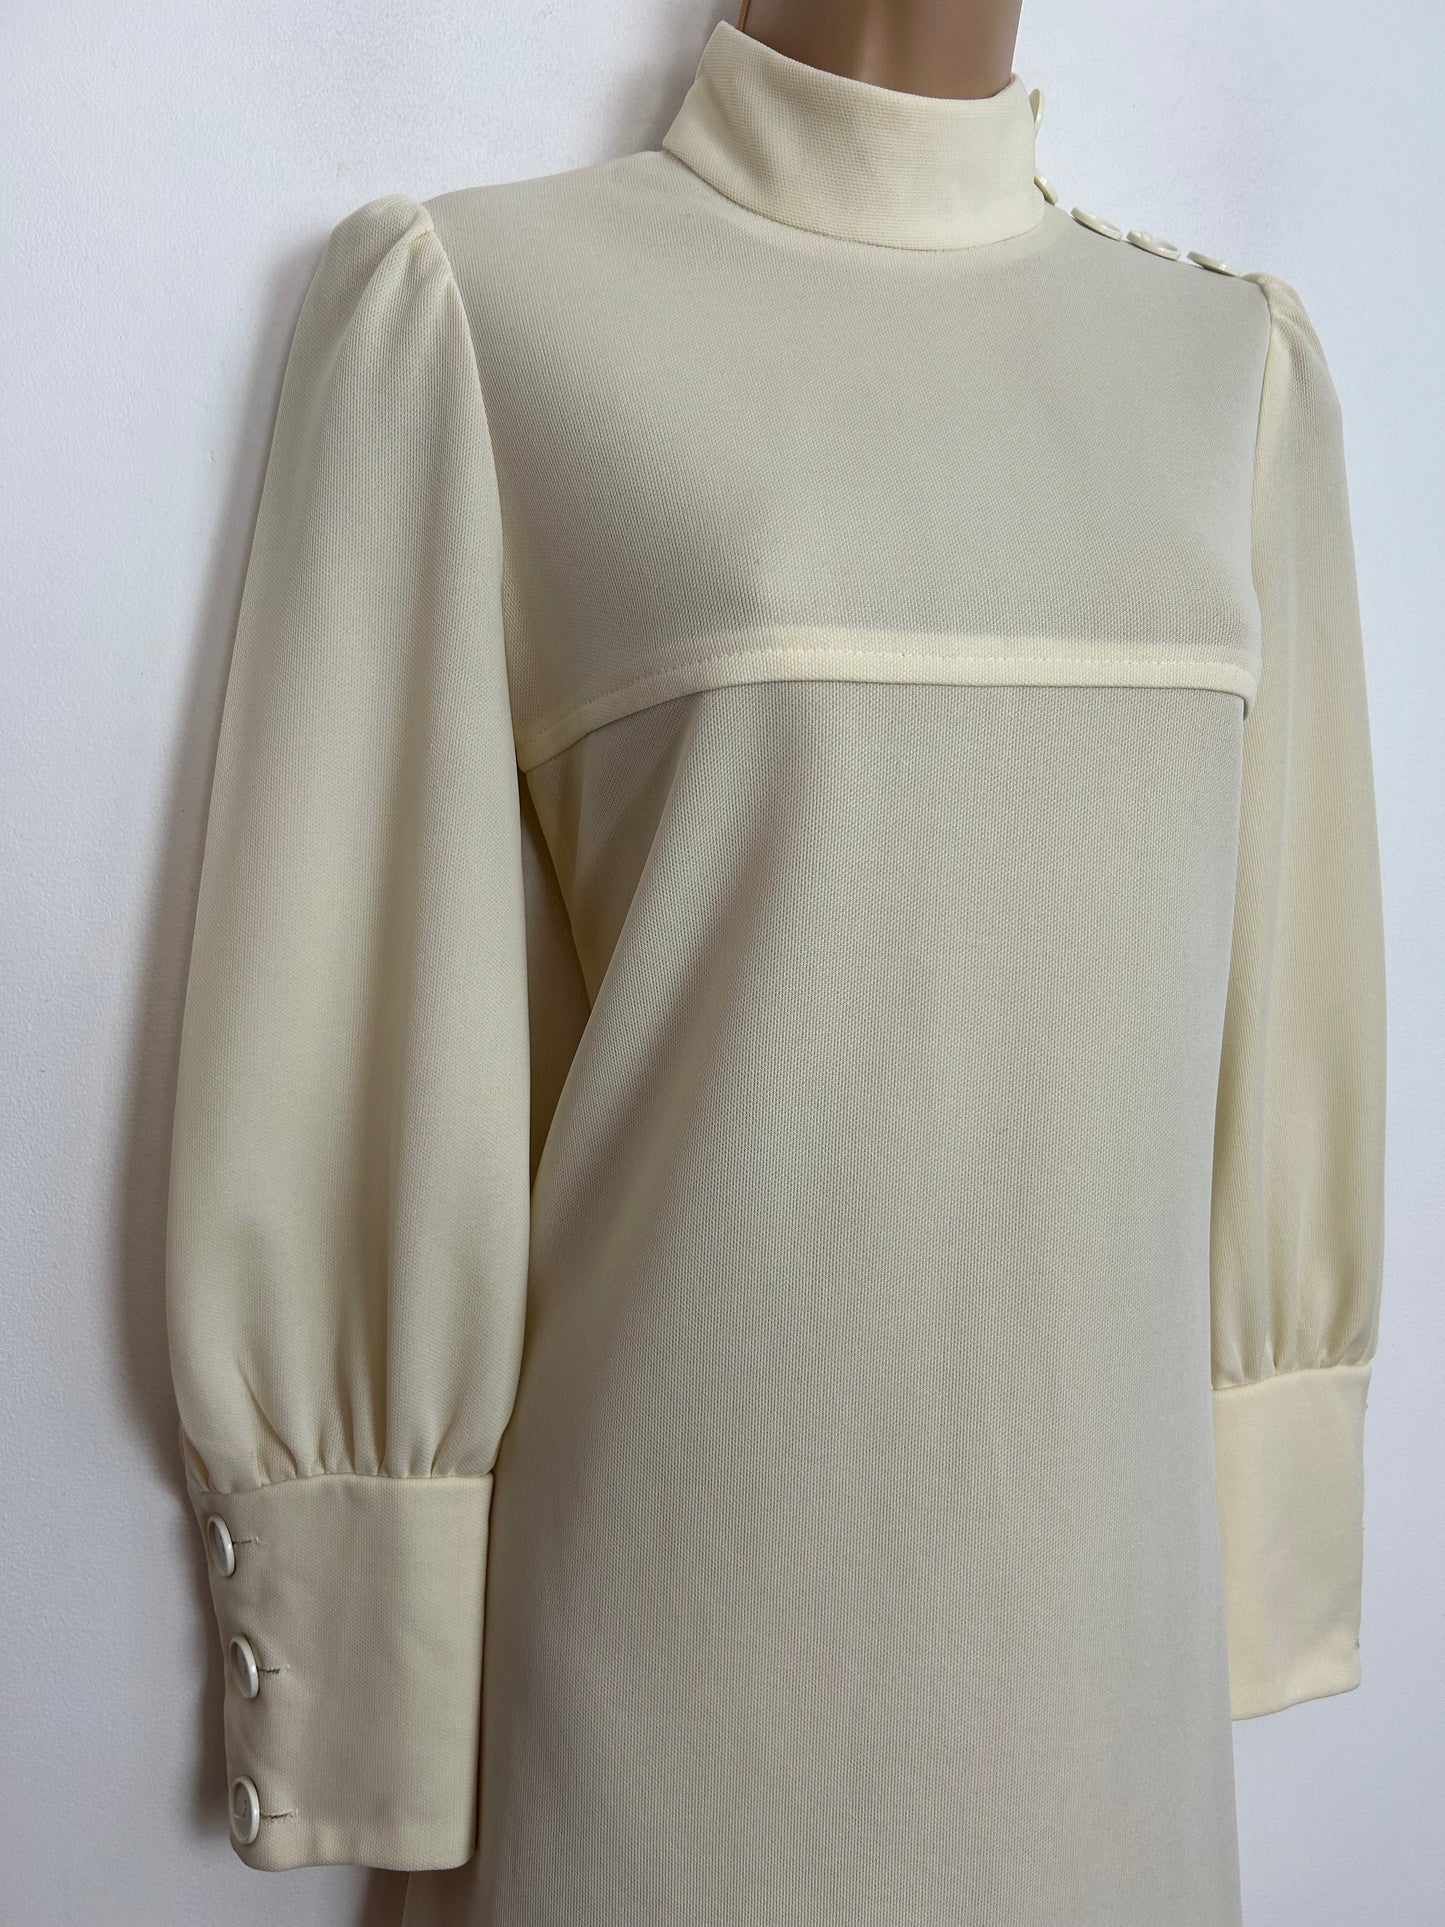 Vintage 1970s UK Size 8-10 Cream Long Sleeve Button Shoulder Mini Mod Shift Dress